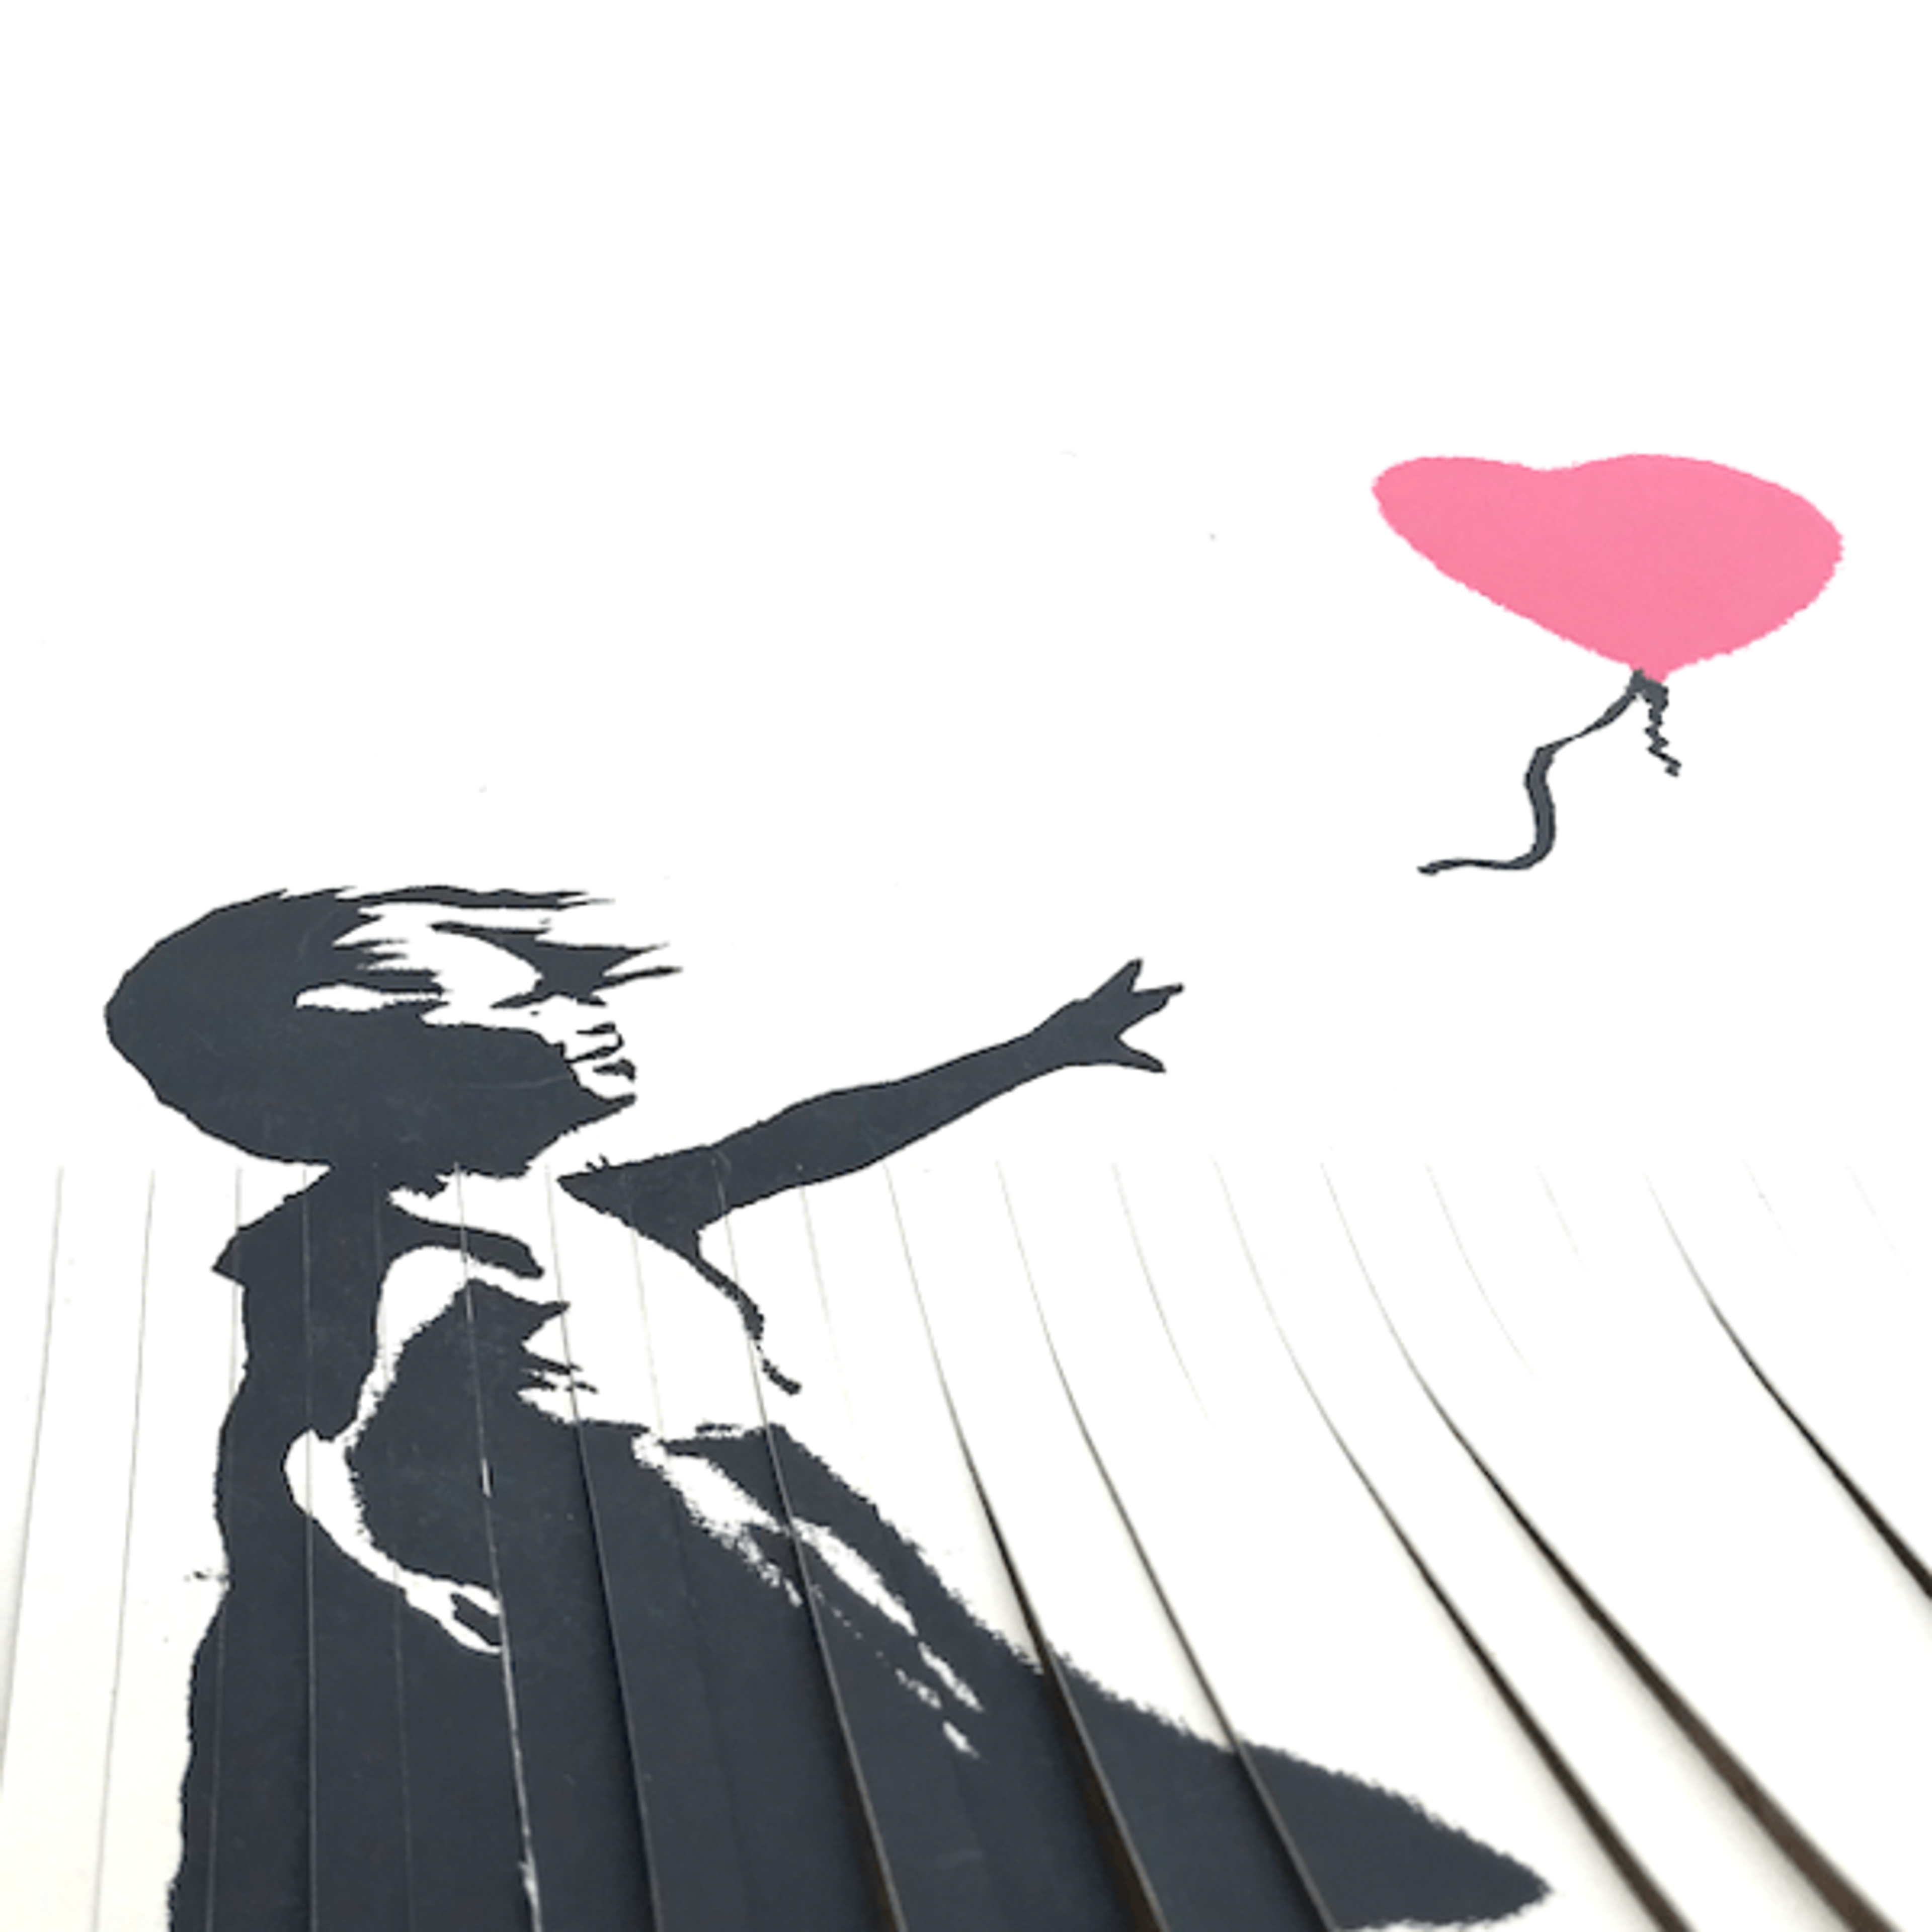 Shredded Girl With Balloon by Banksy - MyArtBroker